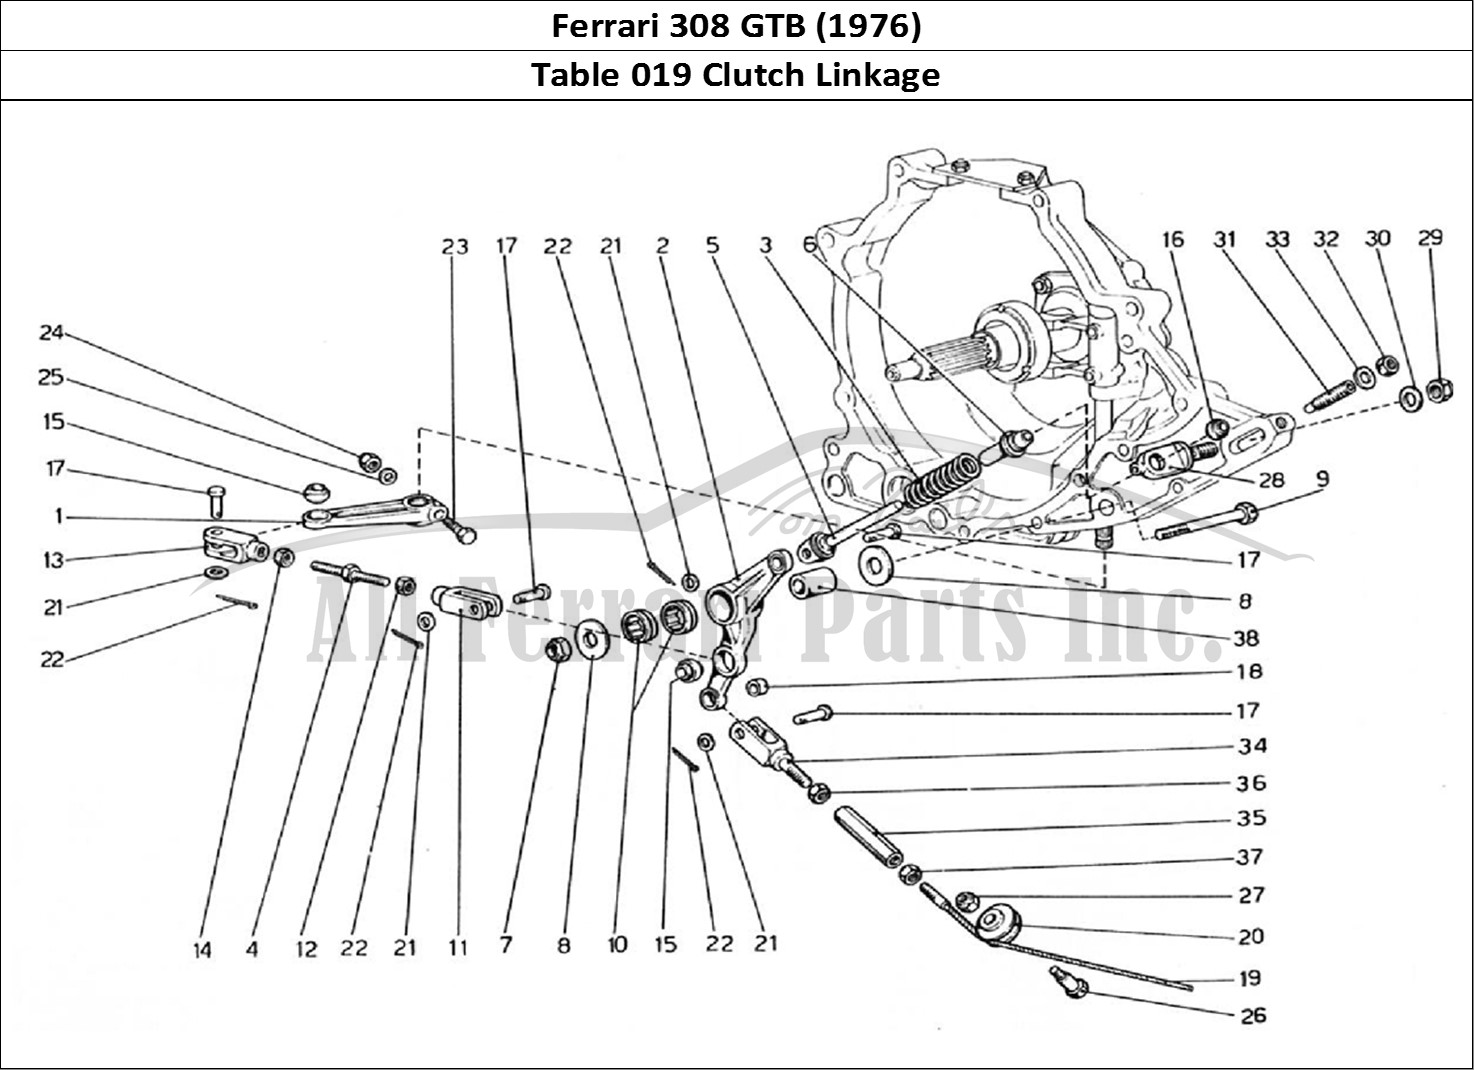 Ferrari Parts Ferrari 308 GTB (1976) Page 019 Clutch Operating Control